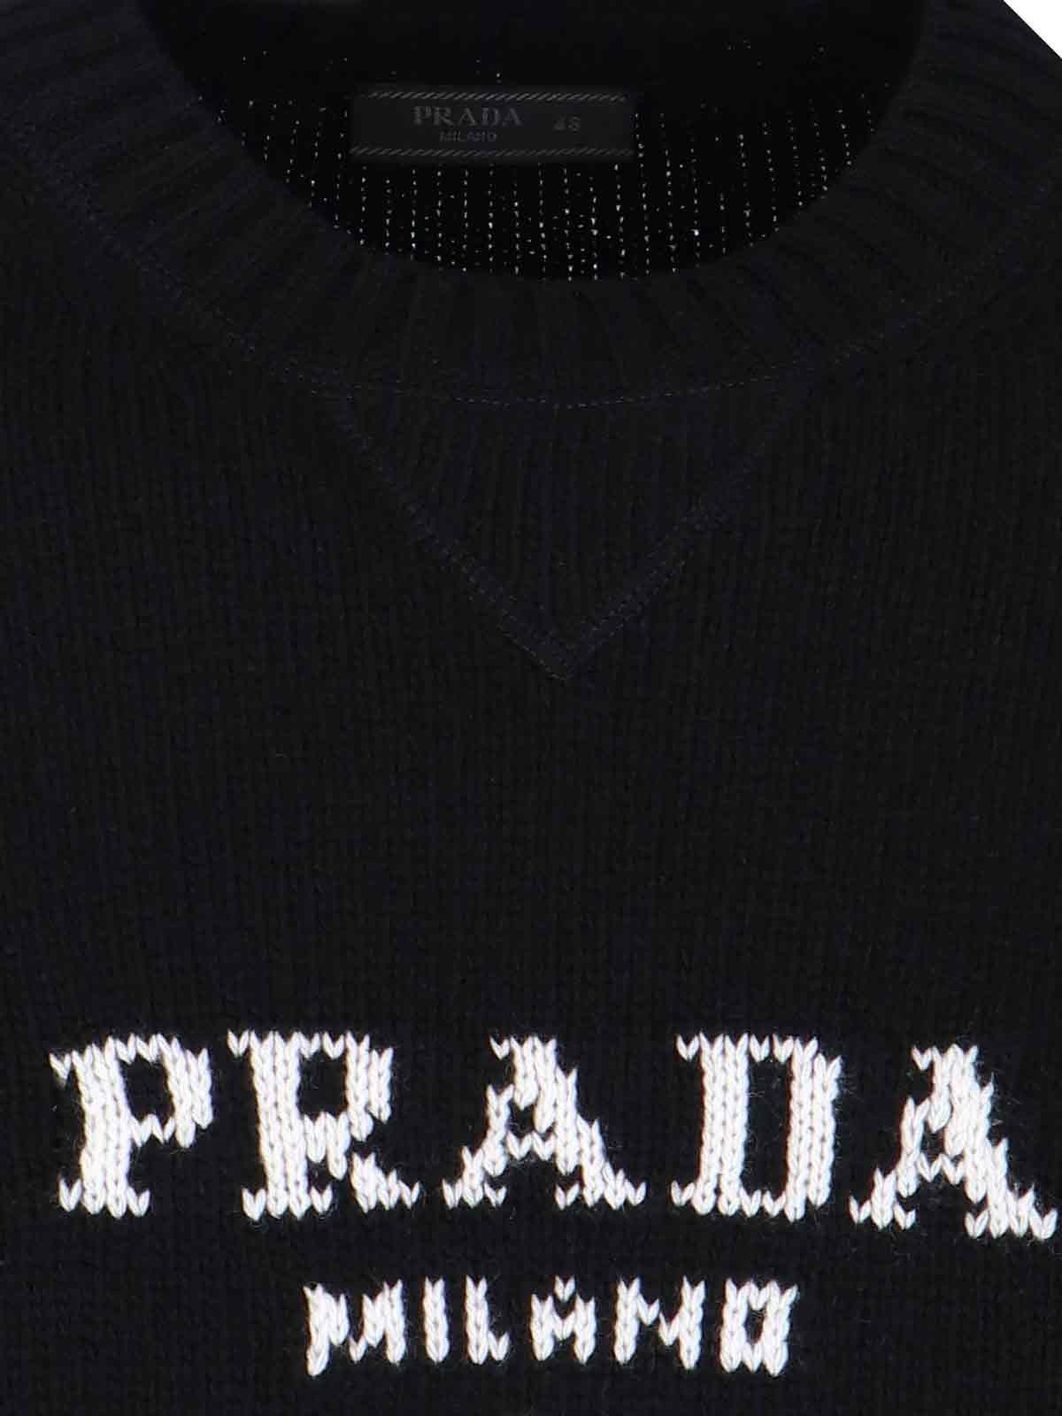 Prada Black Sweater